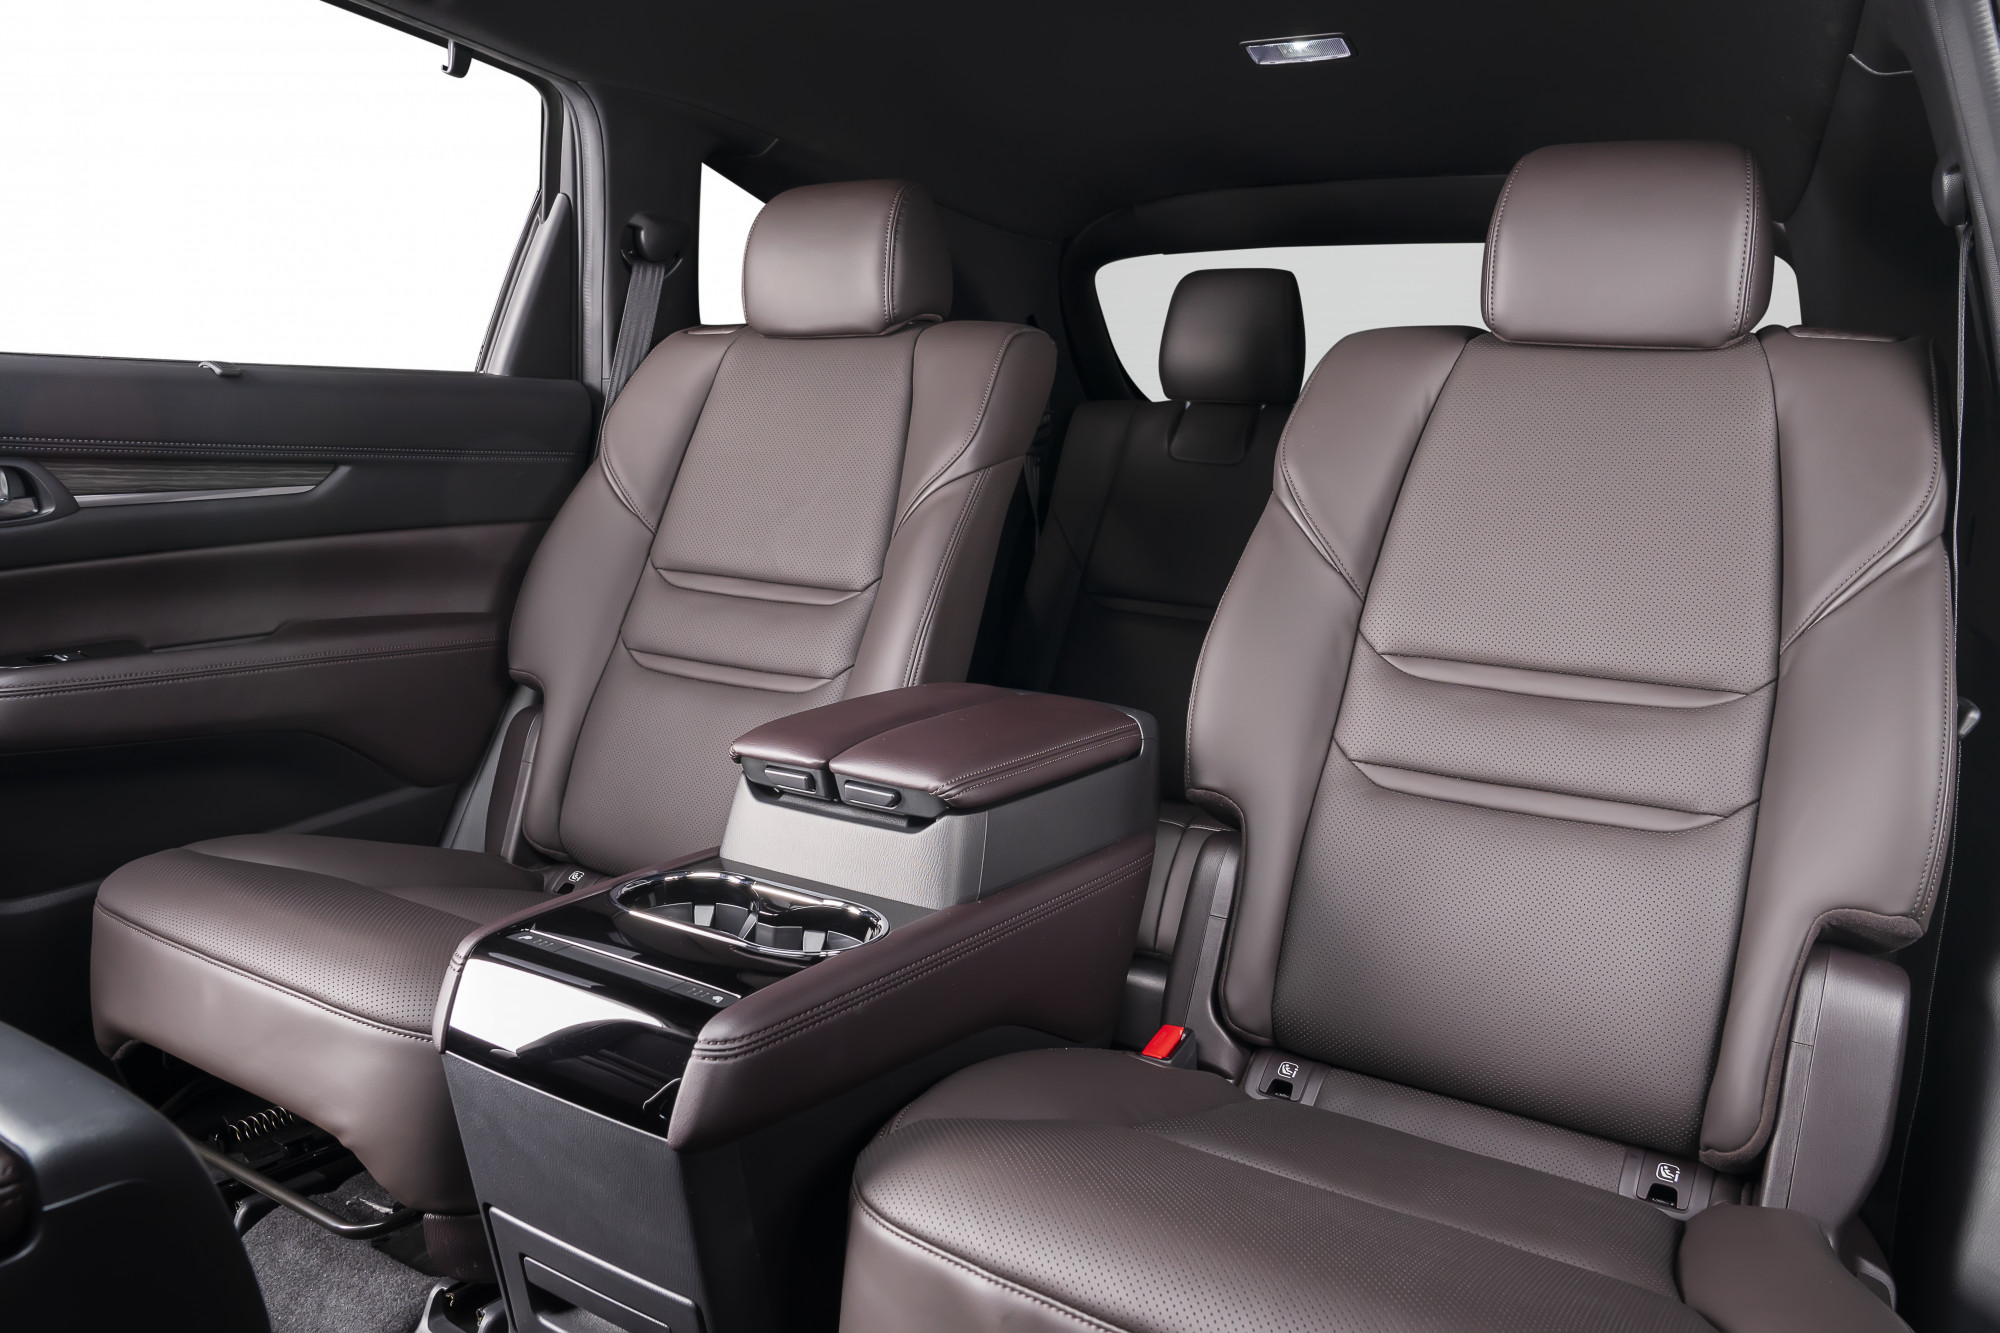 Kiểu ghế Captain’s Seat trên phiên bản New Mazda CX-8 6 chỗ